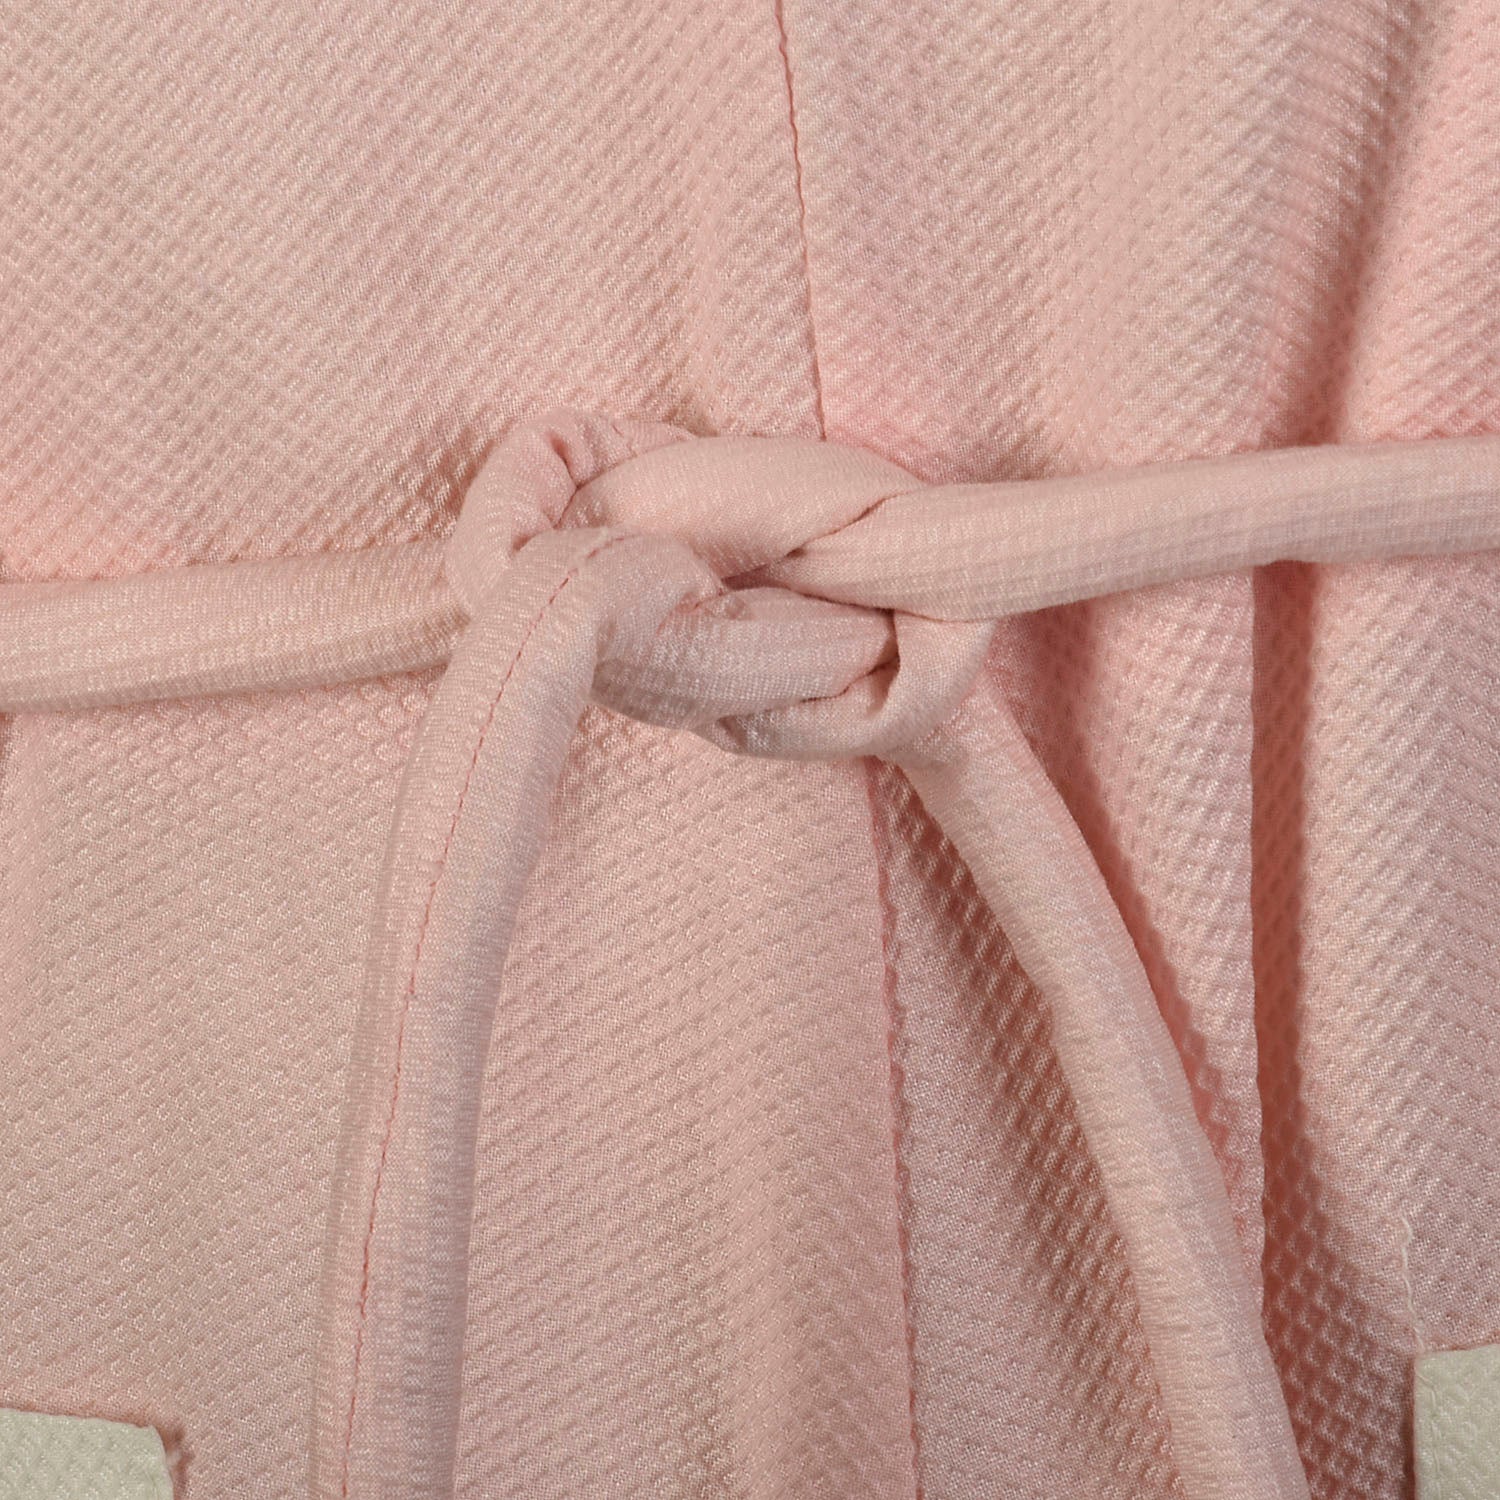 XXL 1950s Pink Day Dress Short Sleeve Deadstock Summer Casual